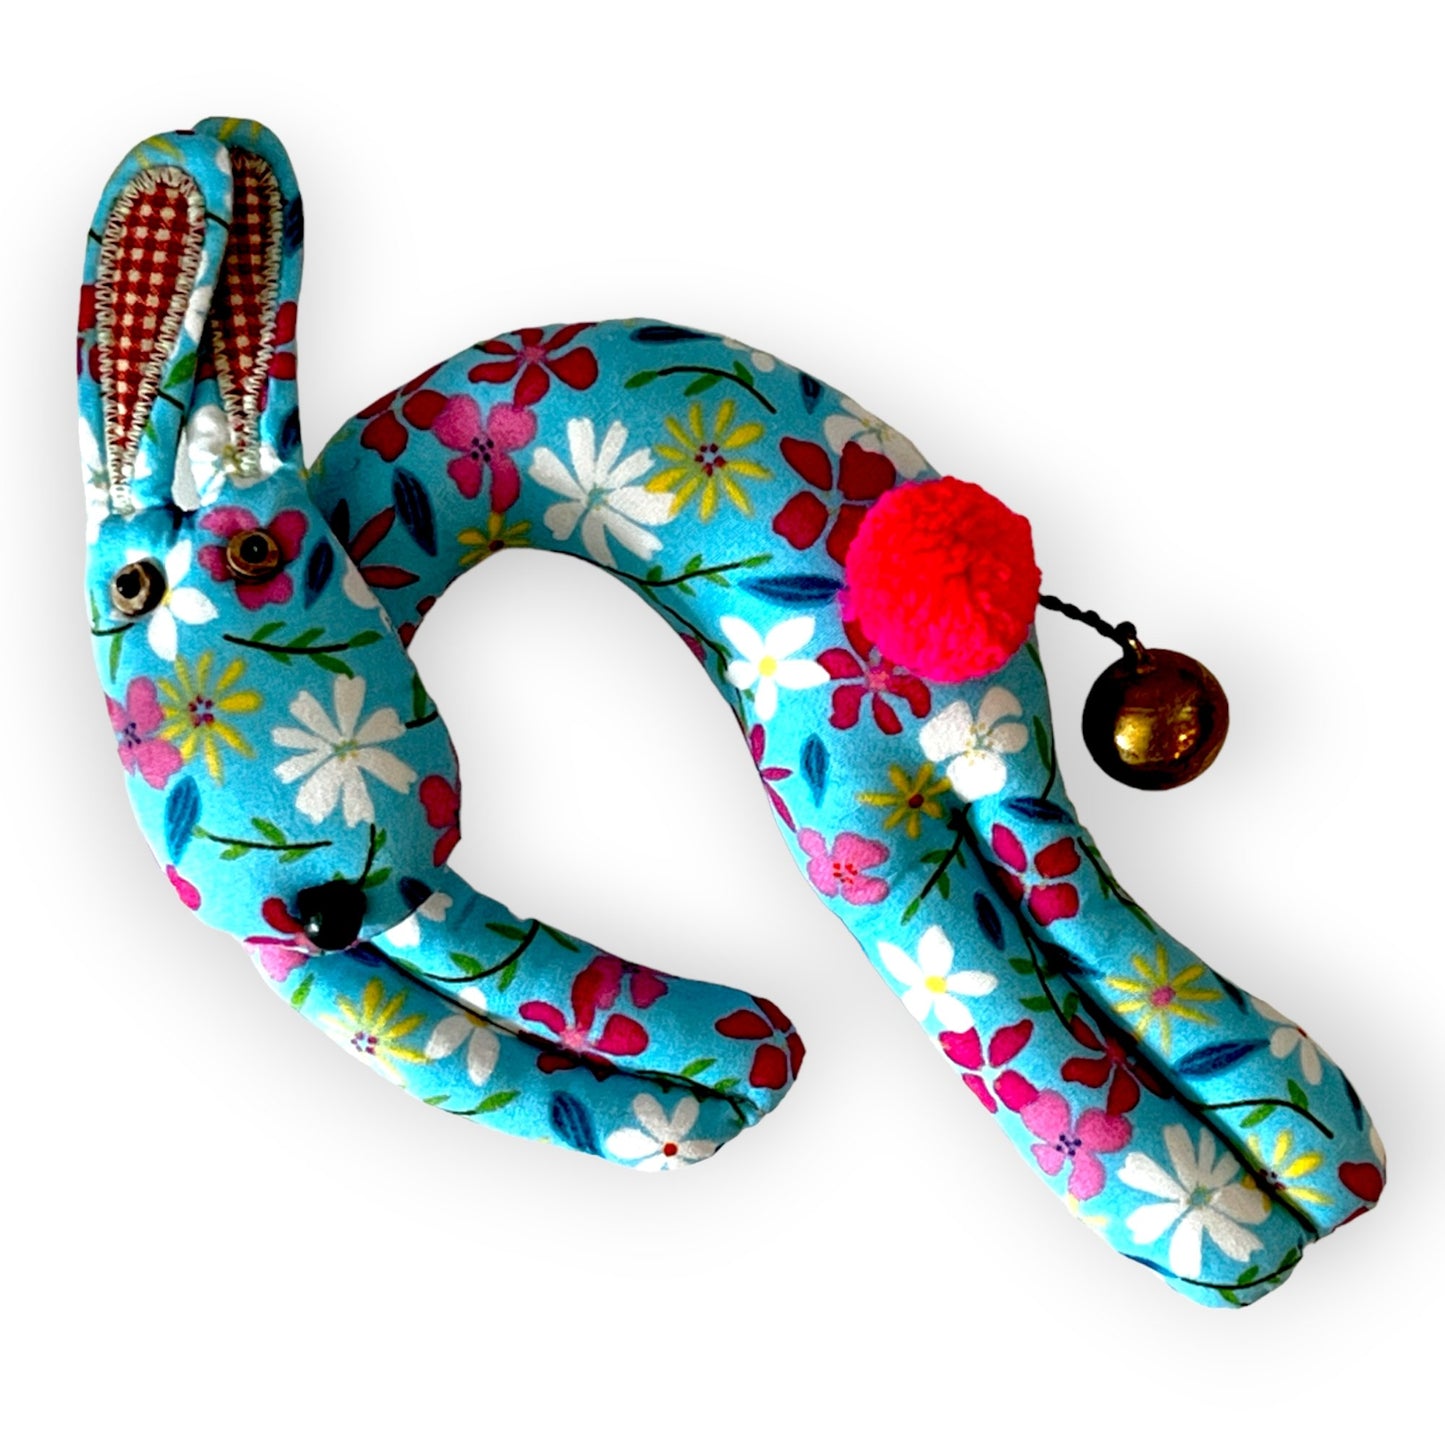 Leaping bunny fabric door jewelry with bell - Sundara Joon